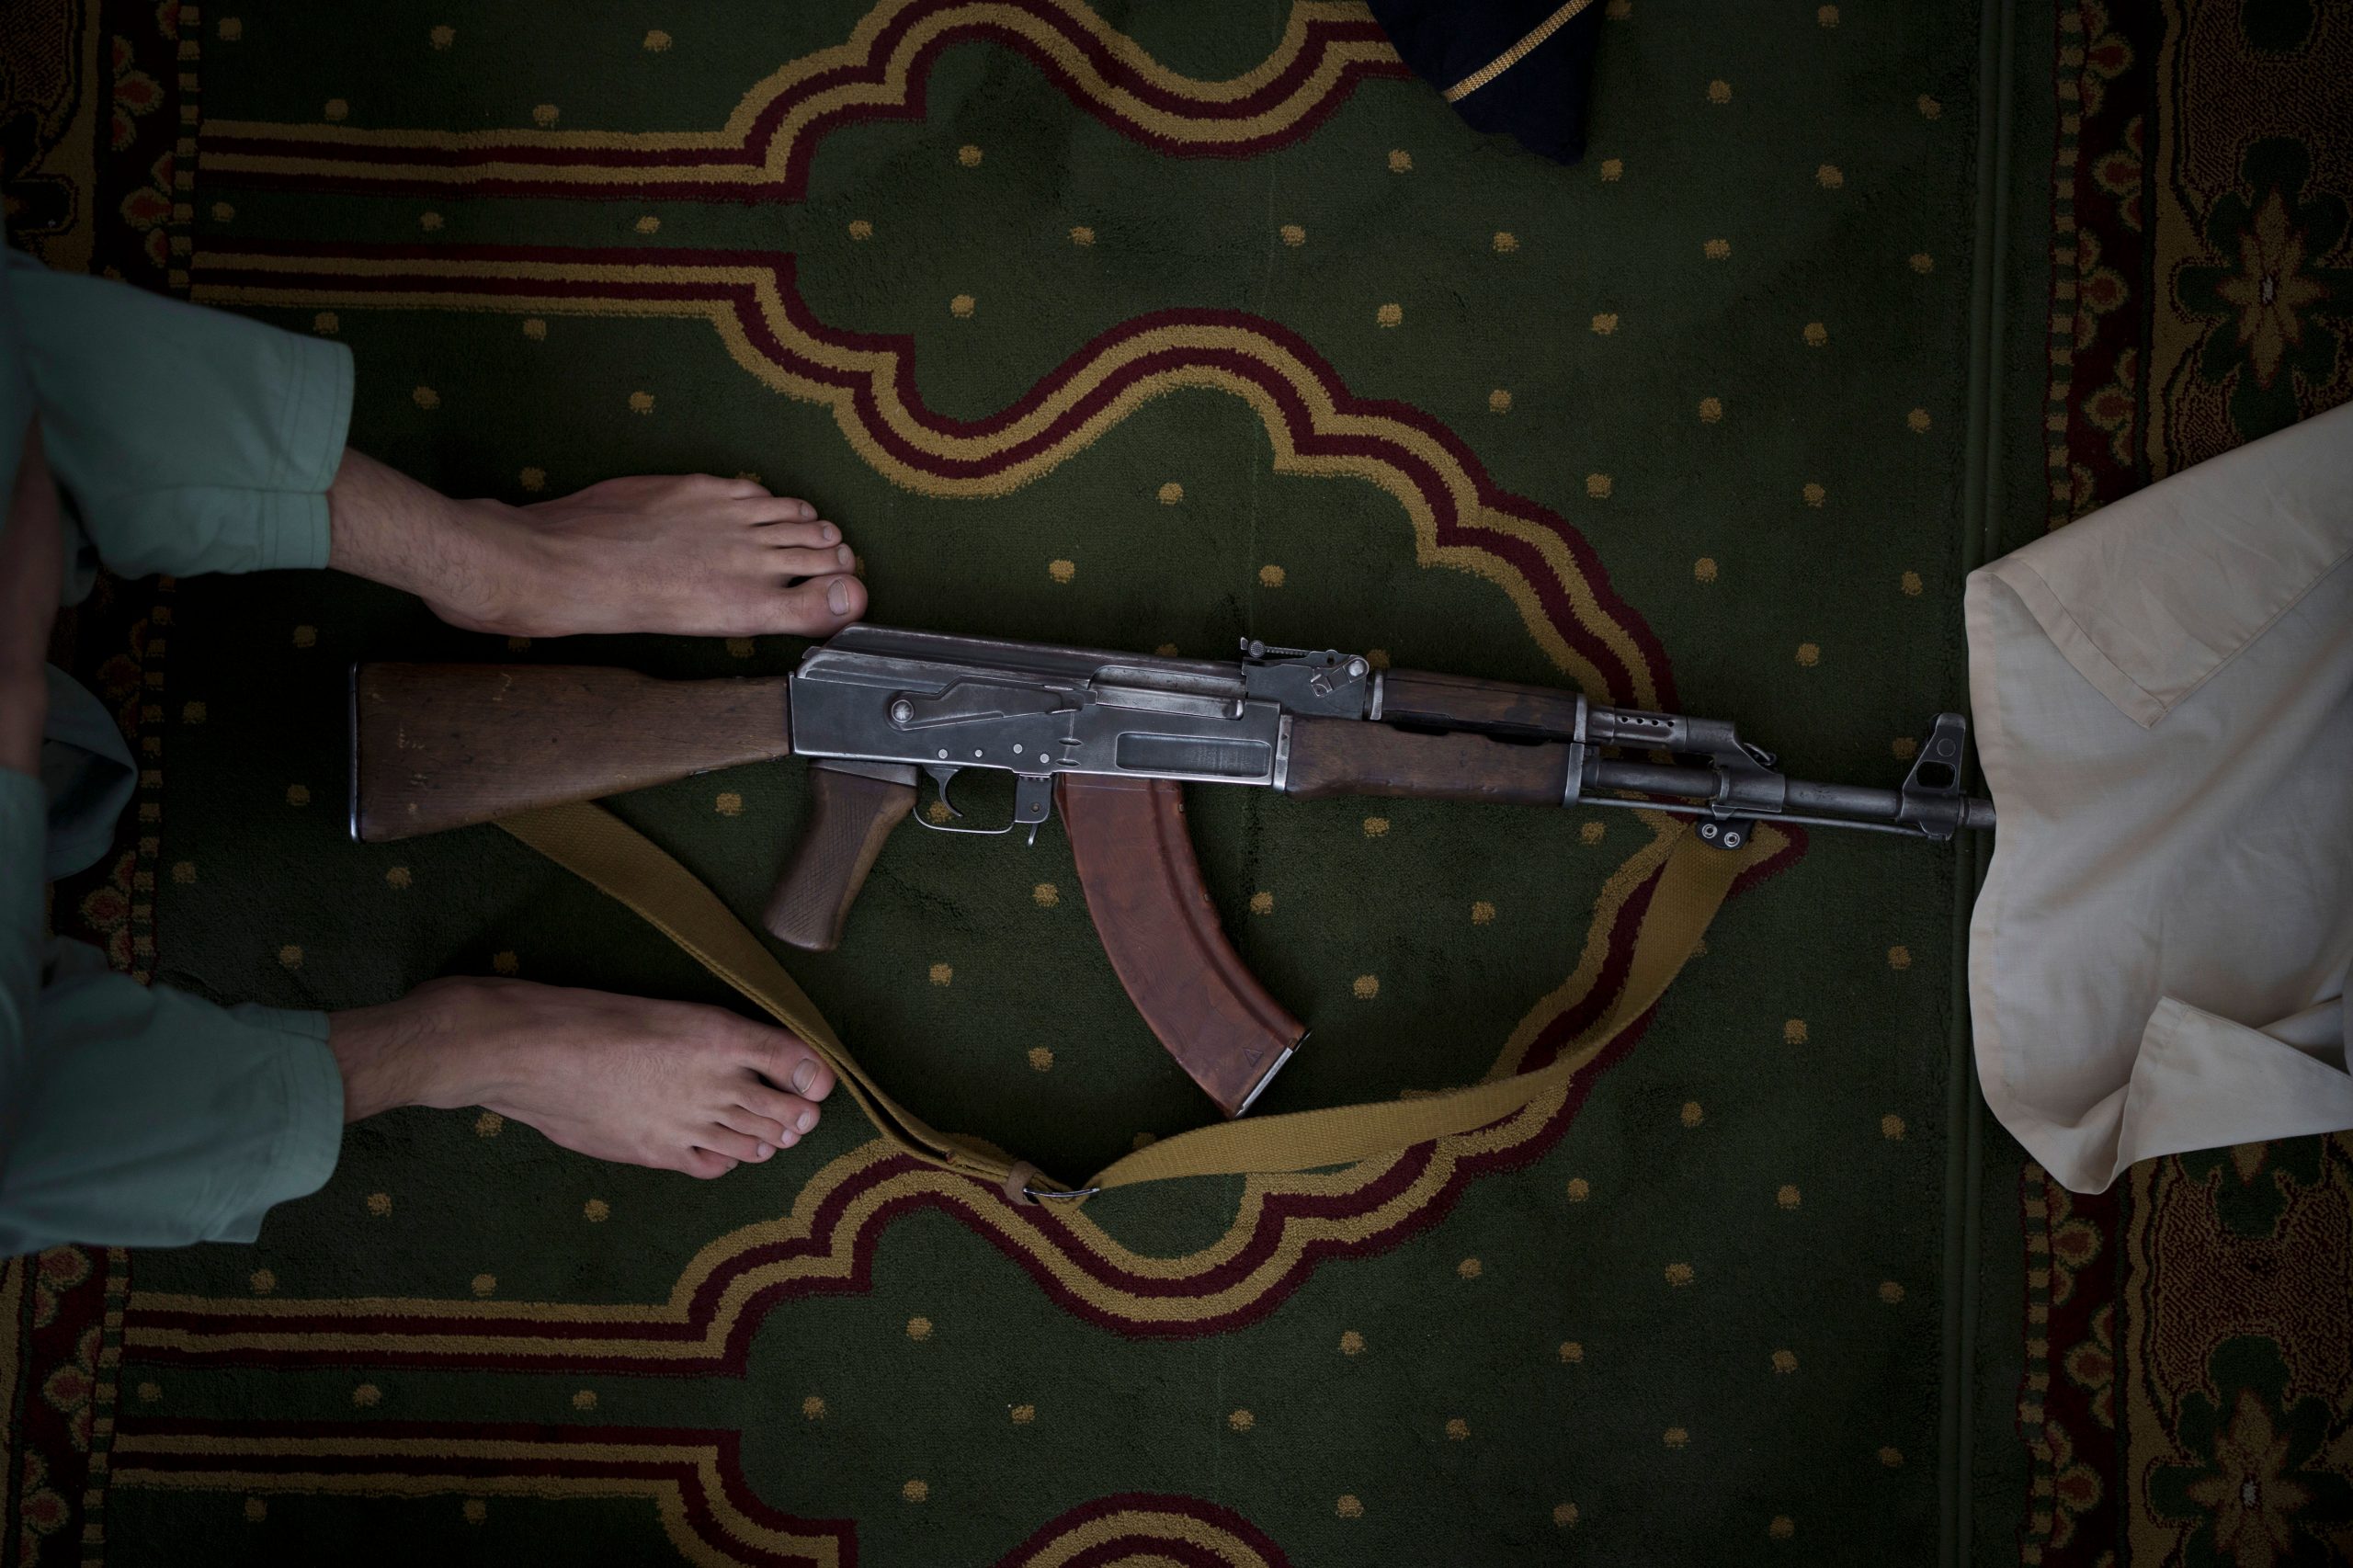 Taliban killed 13 ethnic Hazaras after they surrendered: Amnesty